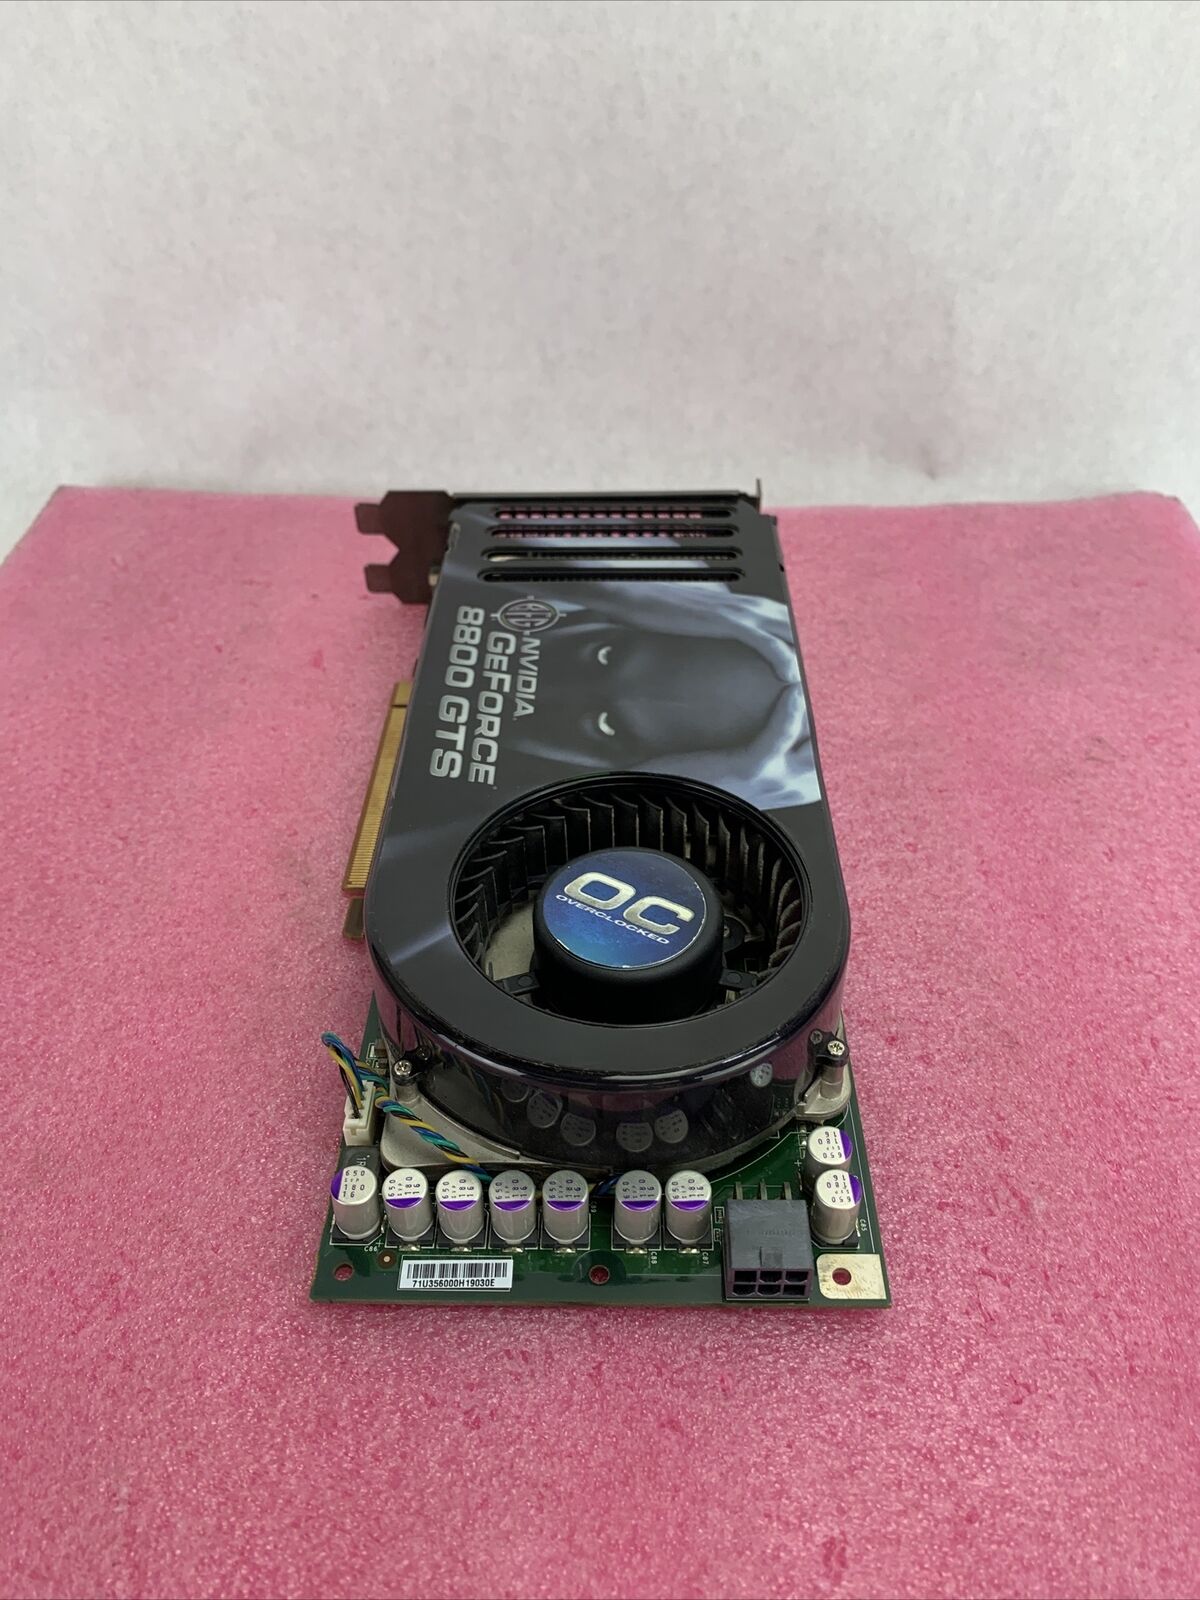 BFG Nvidia GeForce 8800 GTS 320MB GDDR3 Graphics Card